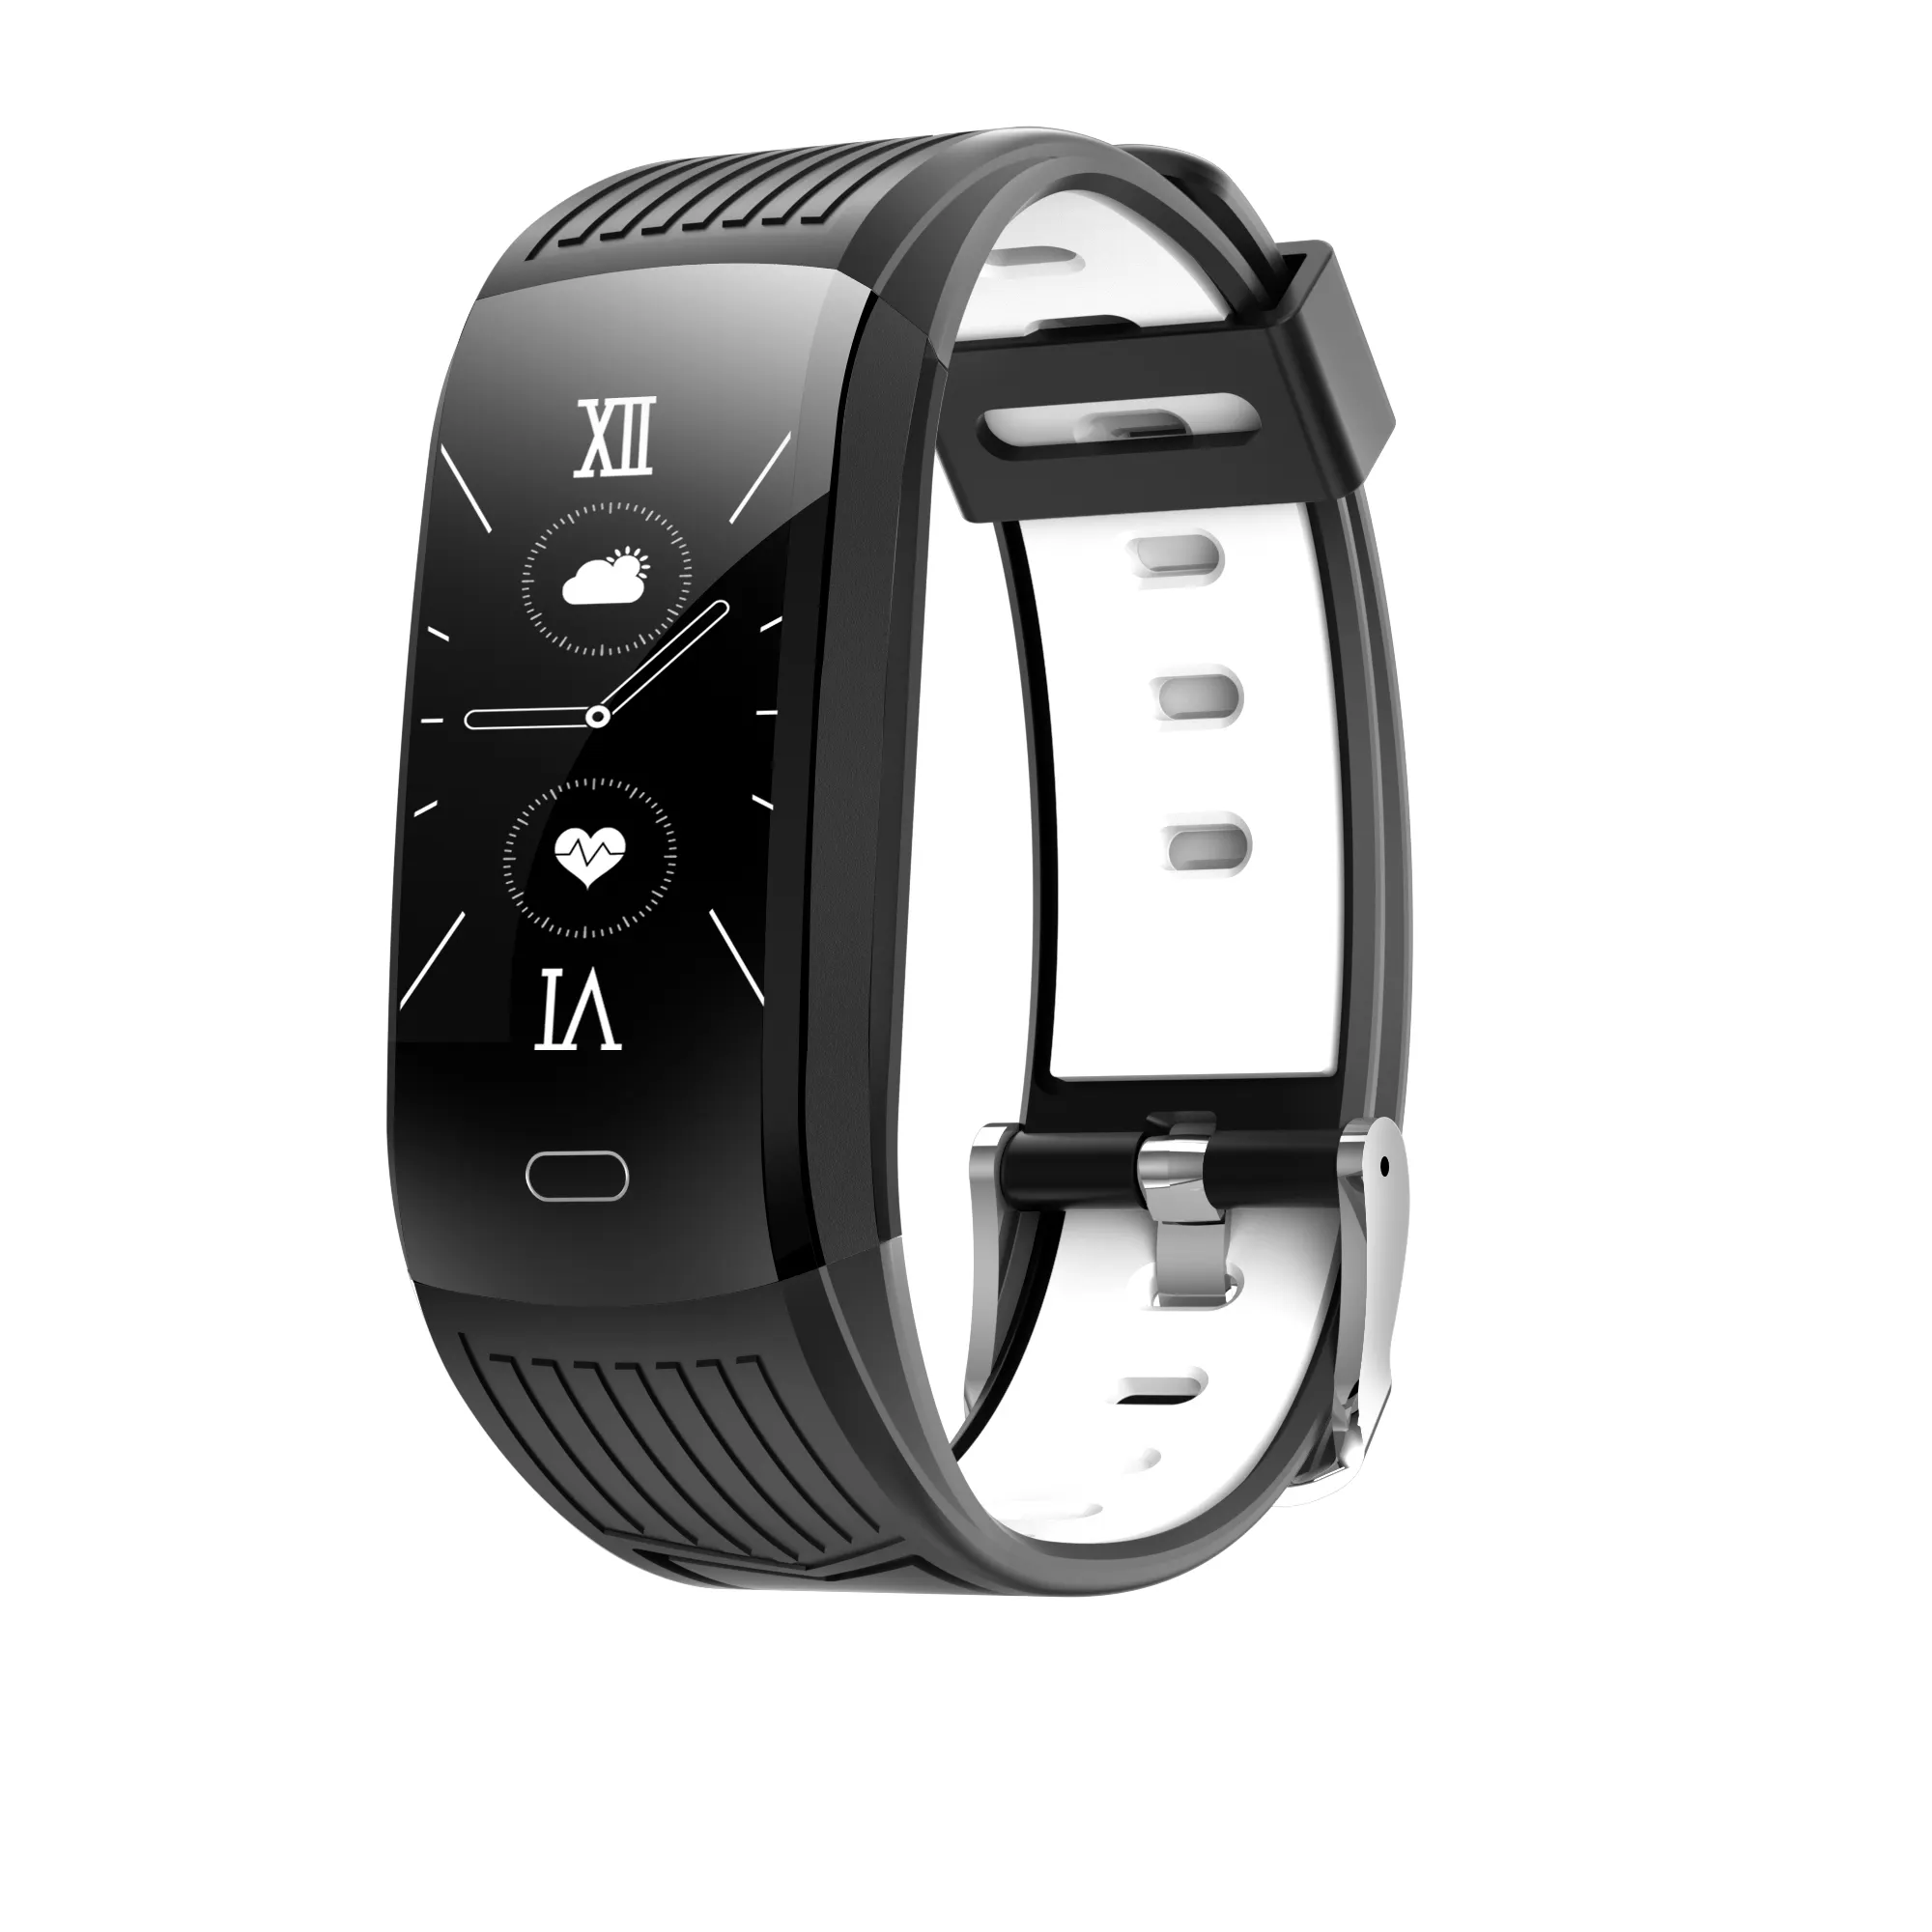 Mini 0.96 Inch Touch Screen Horloge Sport Fitness Gezondheid Tracker IP67 Waterdichte Armband Mobiele Telefoon Android Ios Slimme Horloge